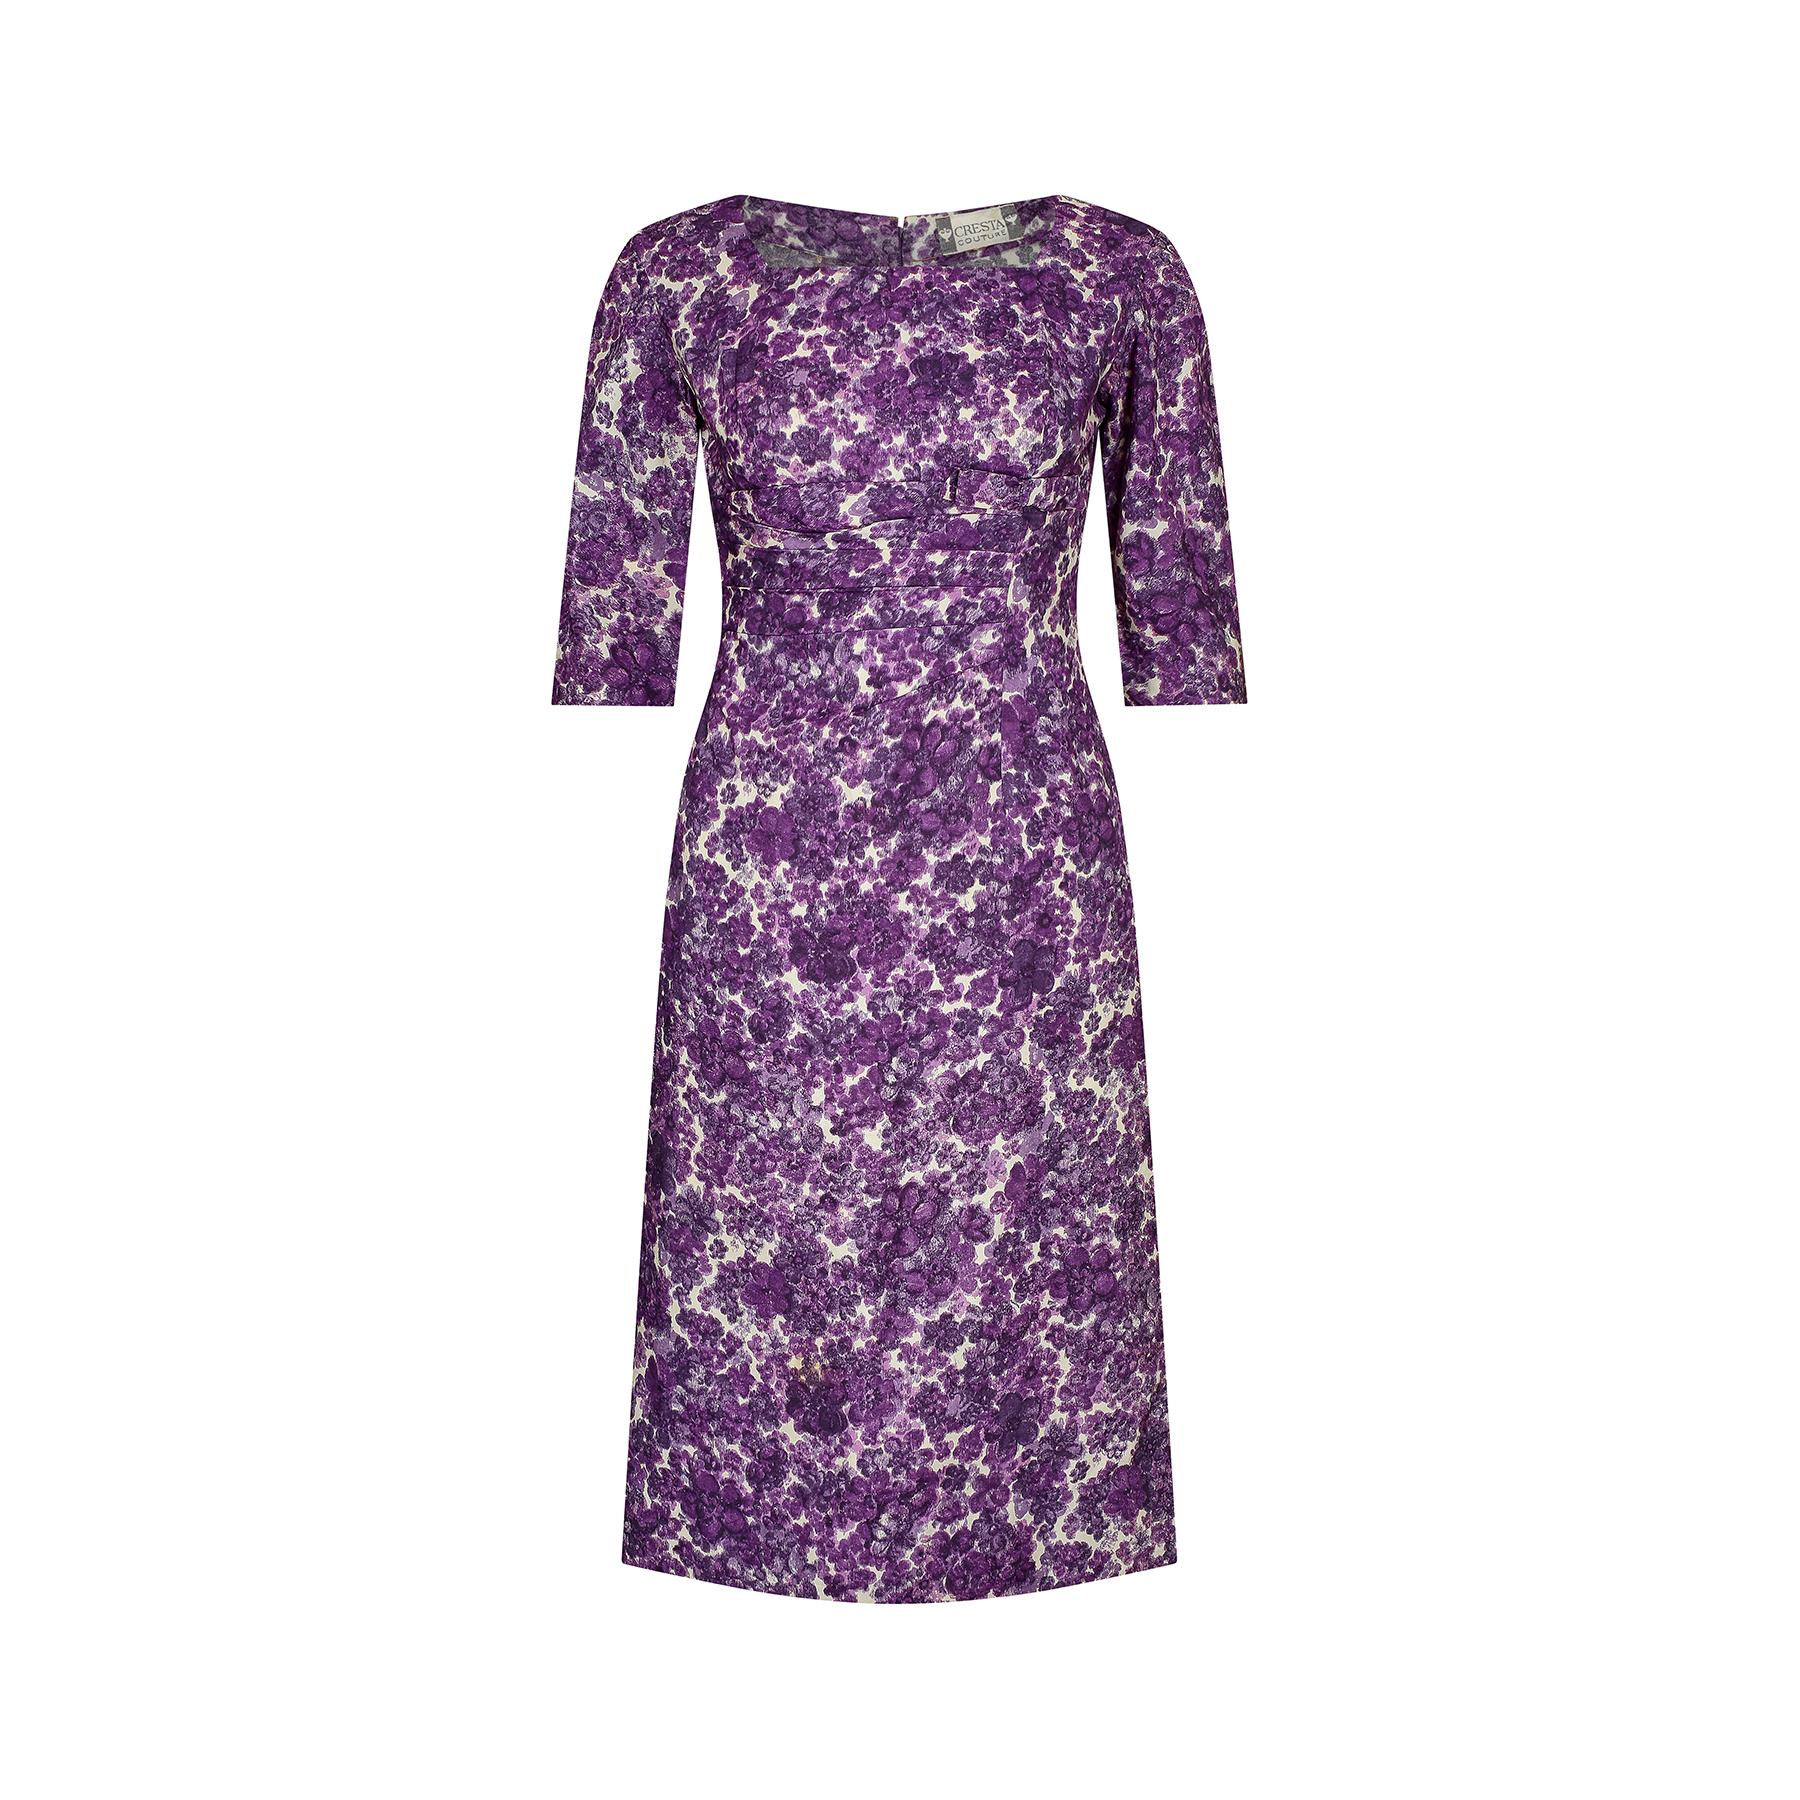 Women's 1960s Cresta Couture Purple Floral Print Dress For Sale